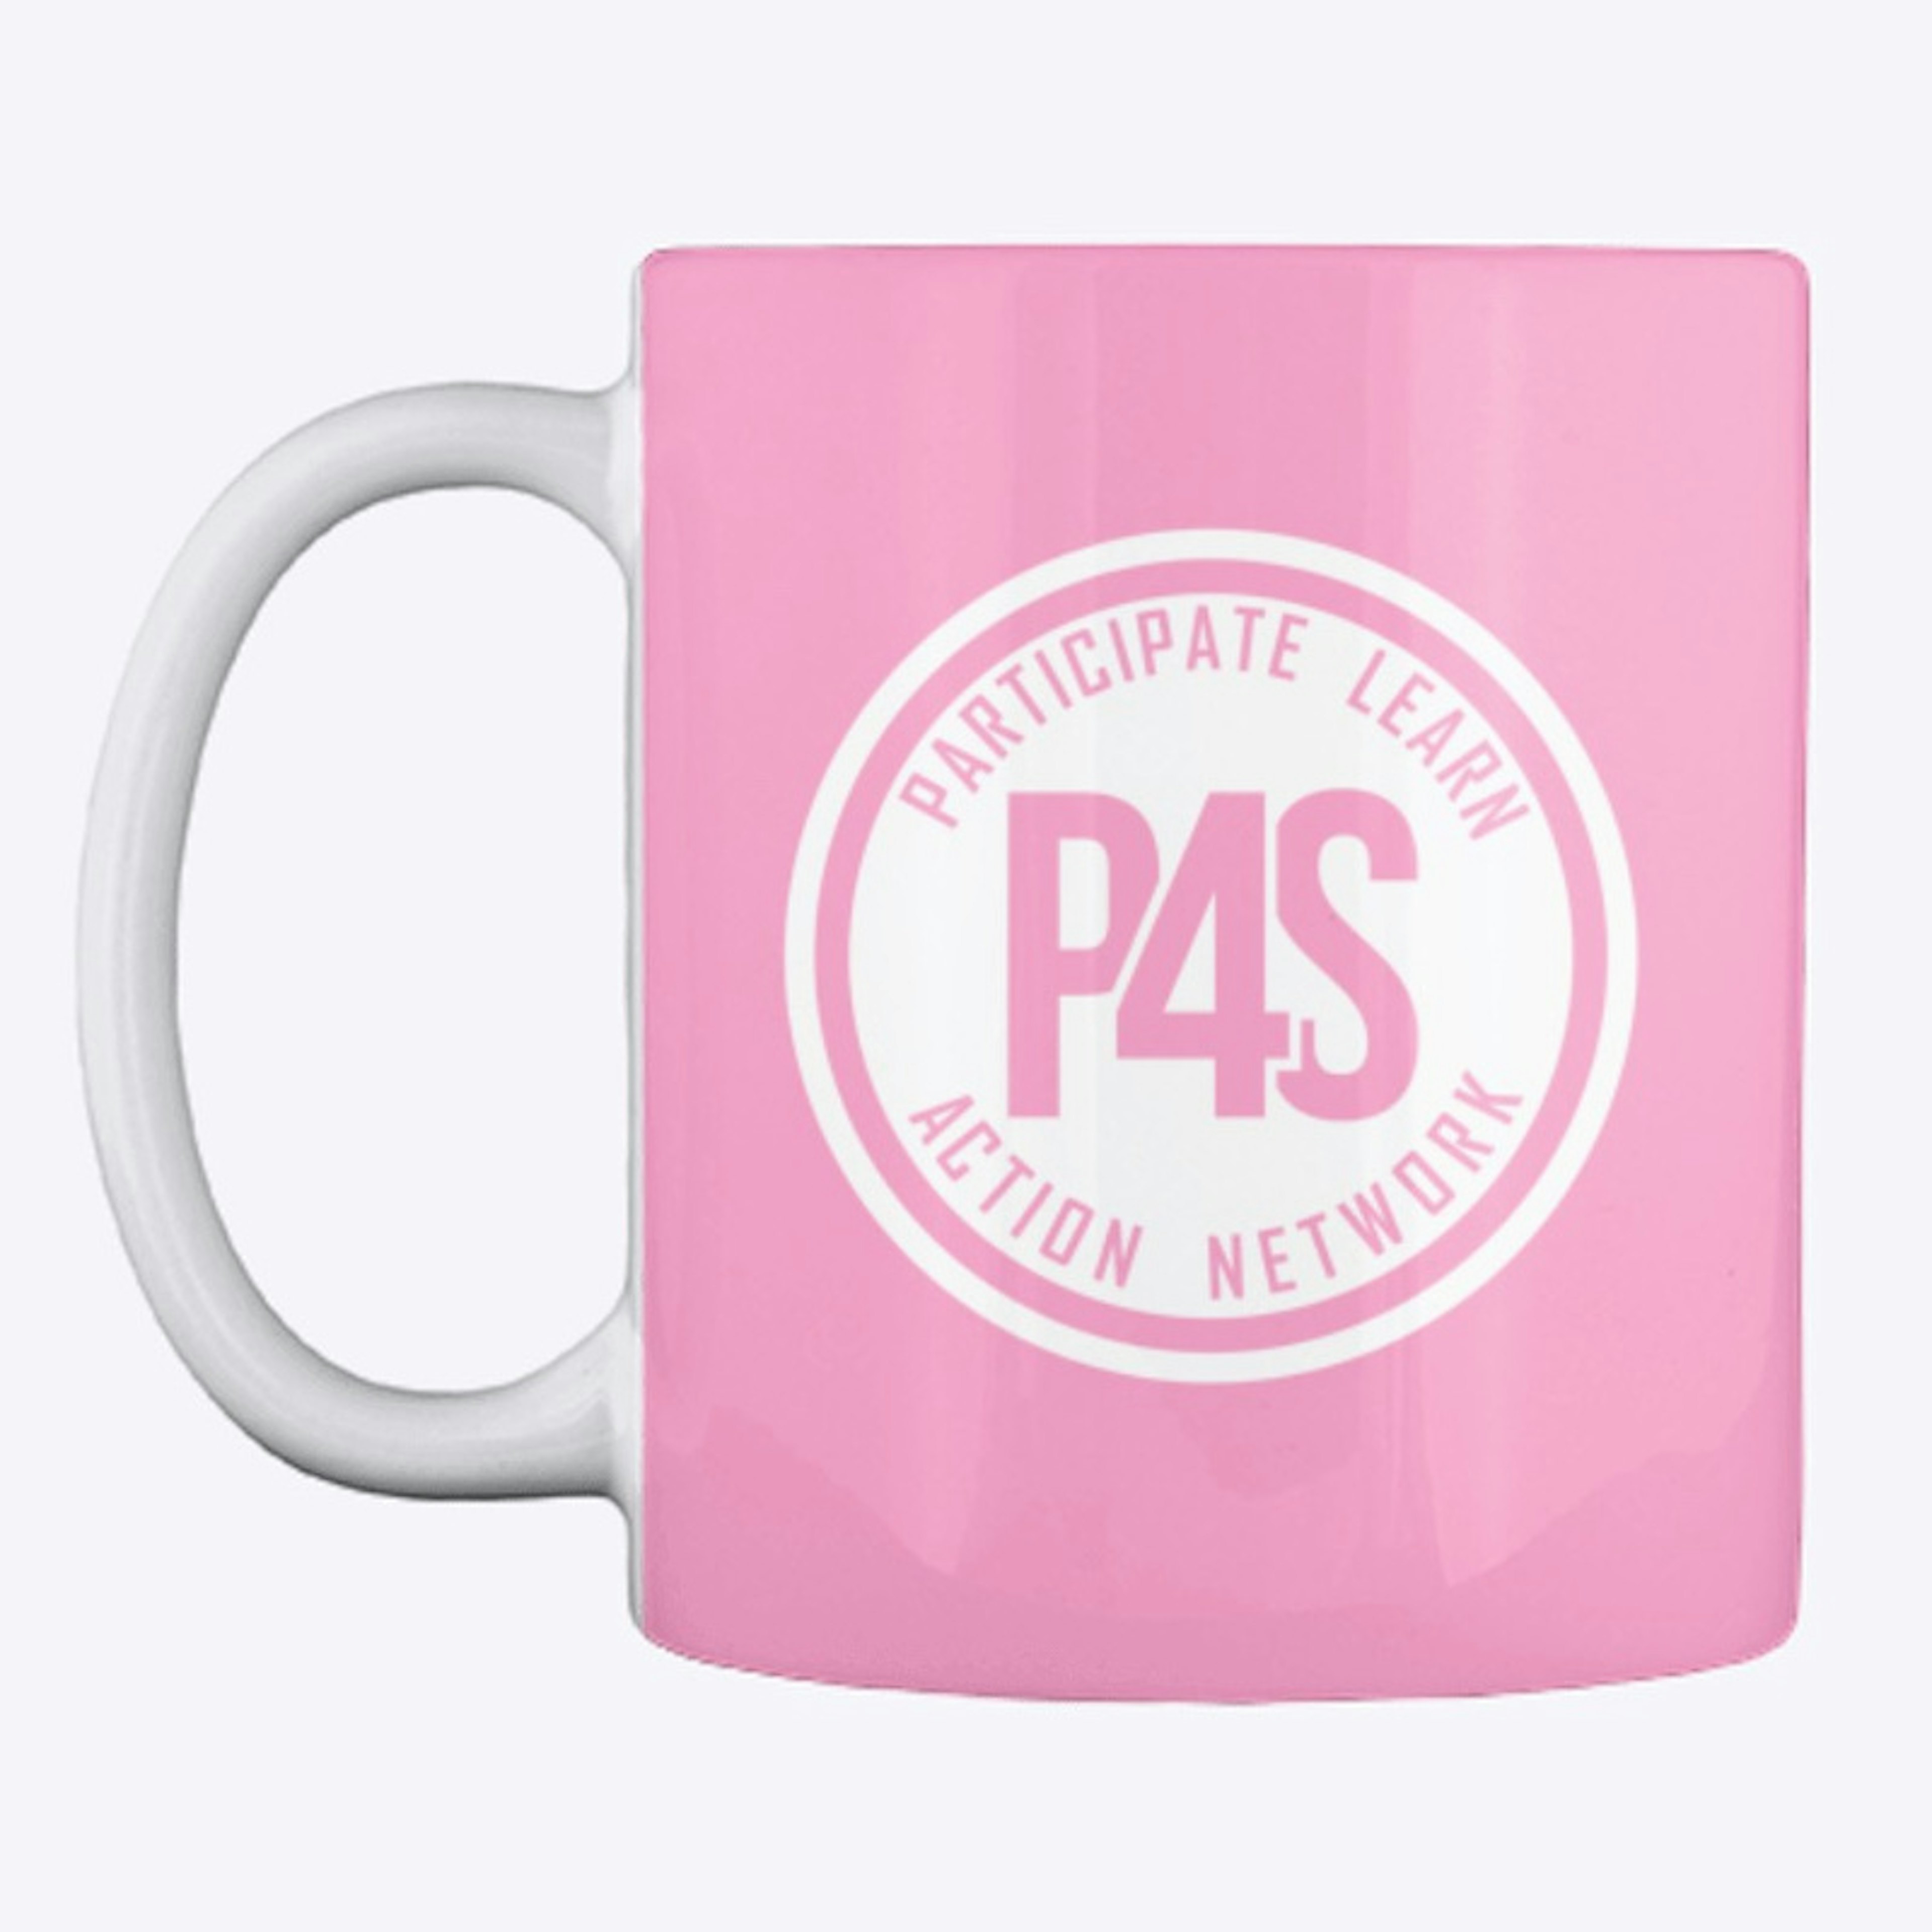 P4S Coffee Mug 4